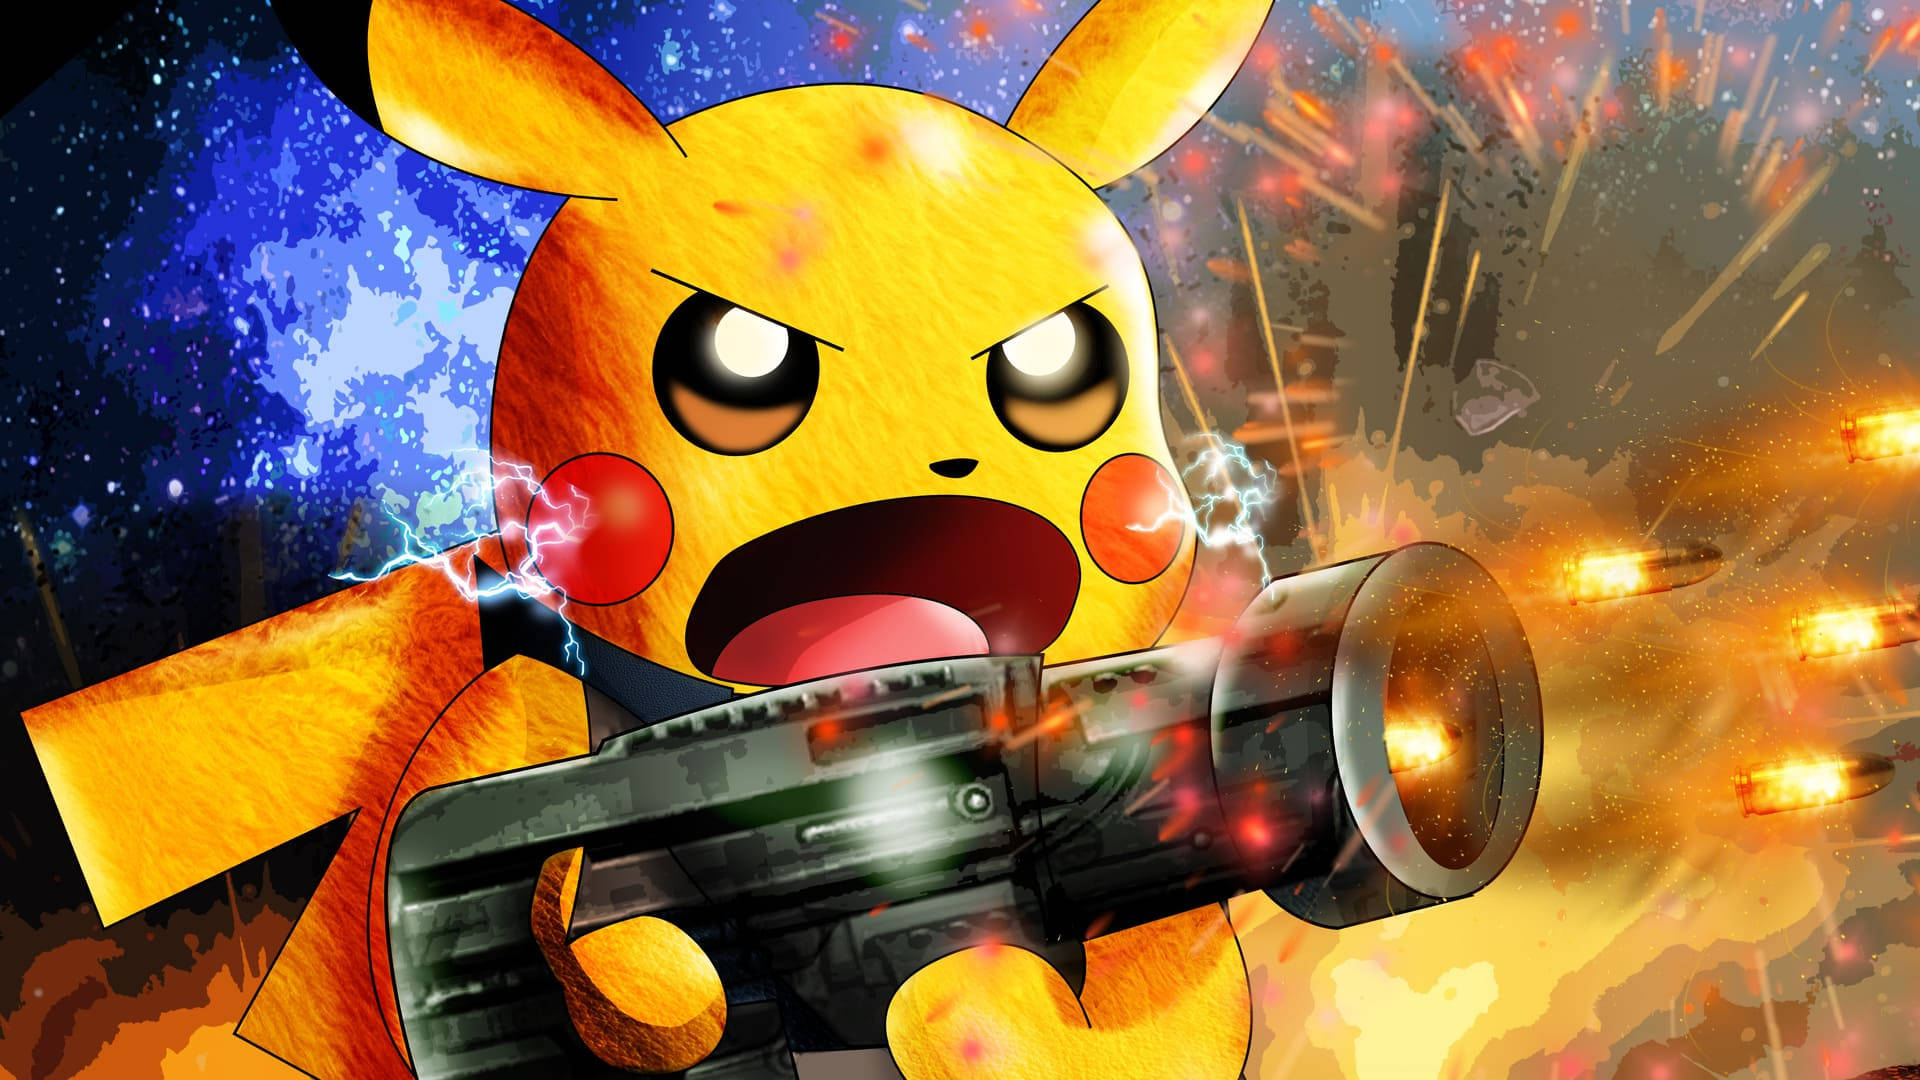 Angry Pikachu With Gun Cool Pokemon Wallpaper